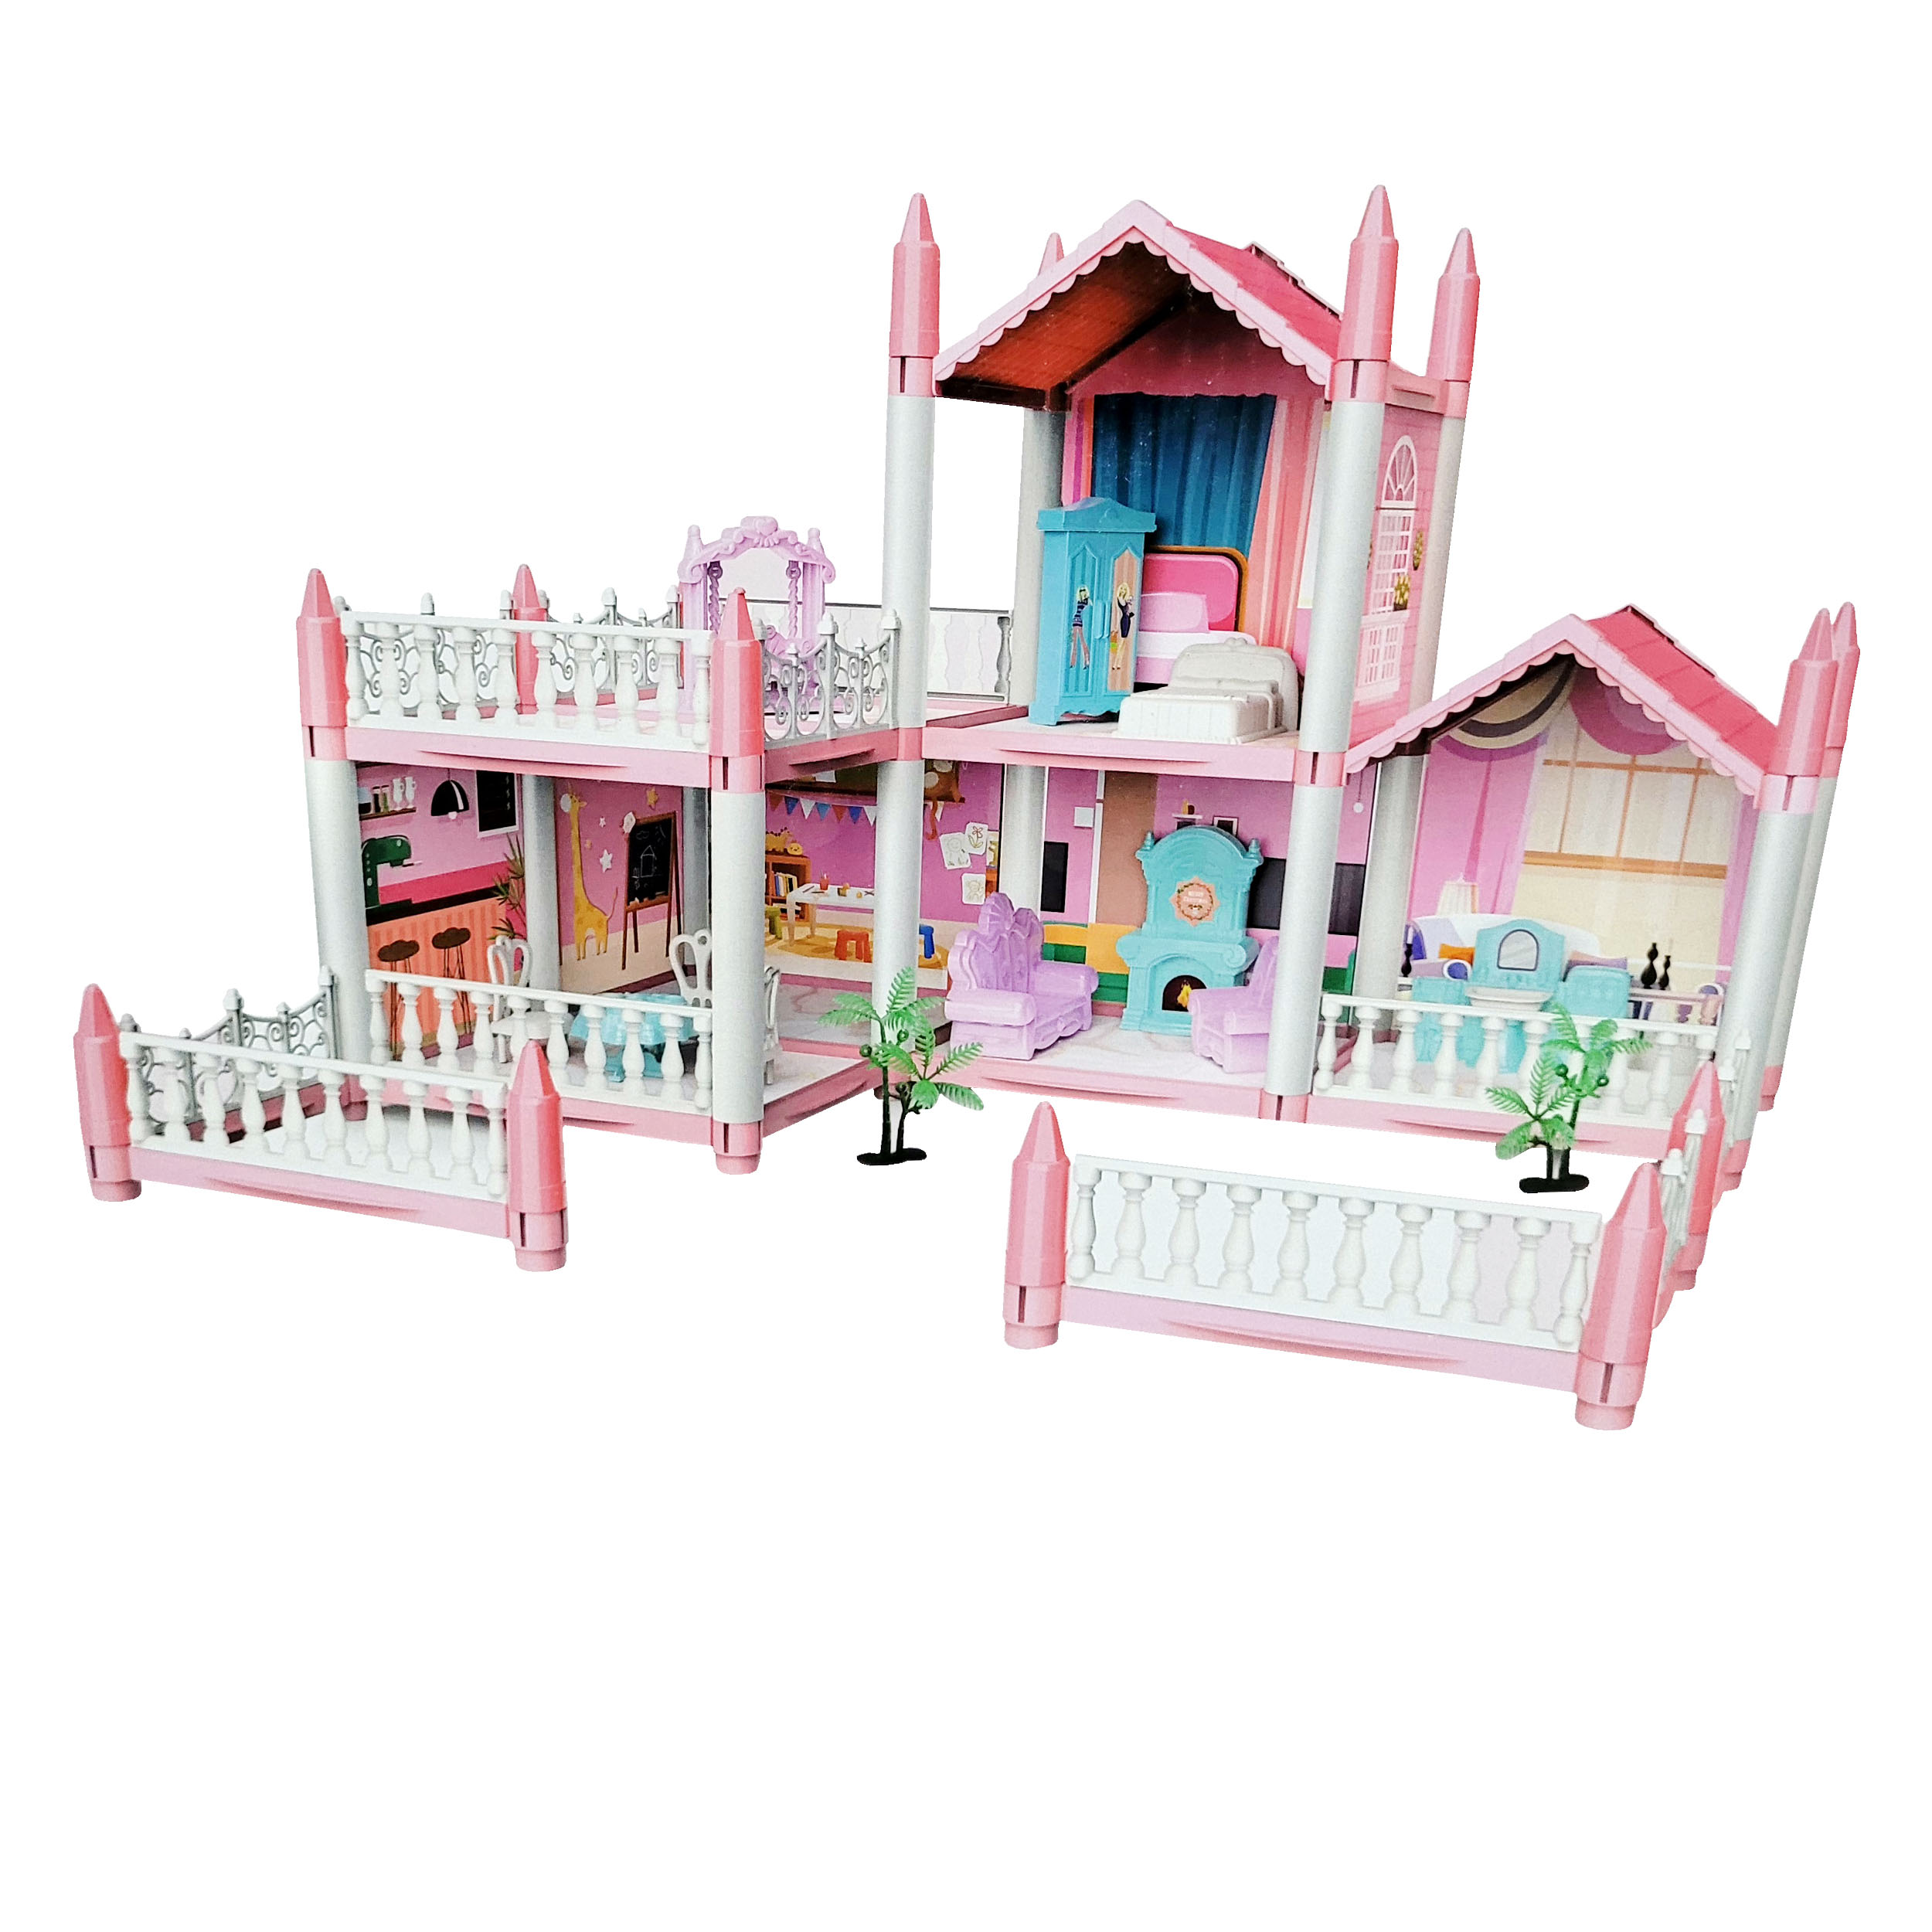 اسباب بازی طرح خانه عروسکی مدل Beautiful home کد 462